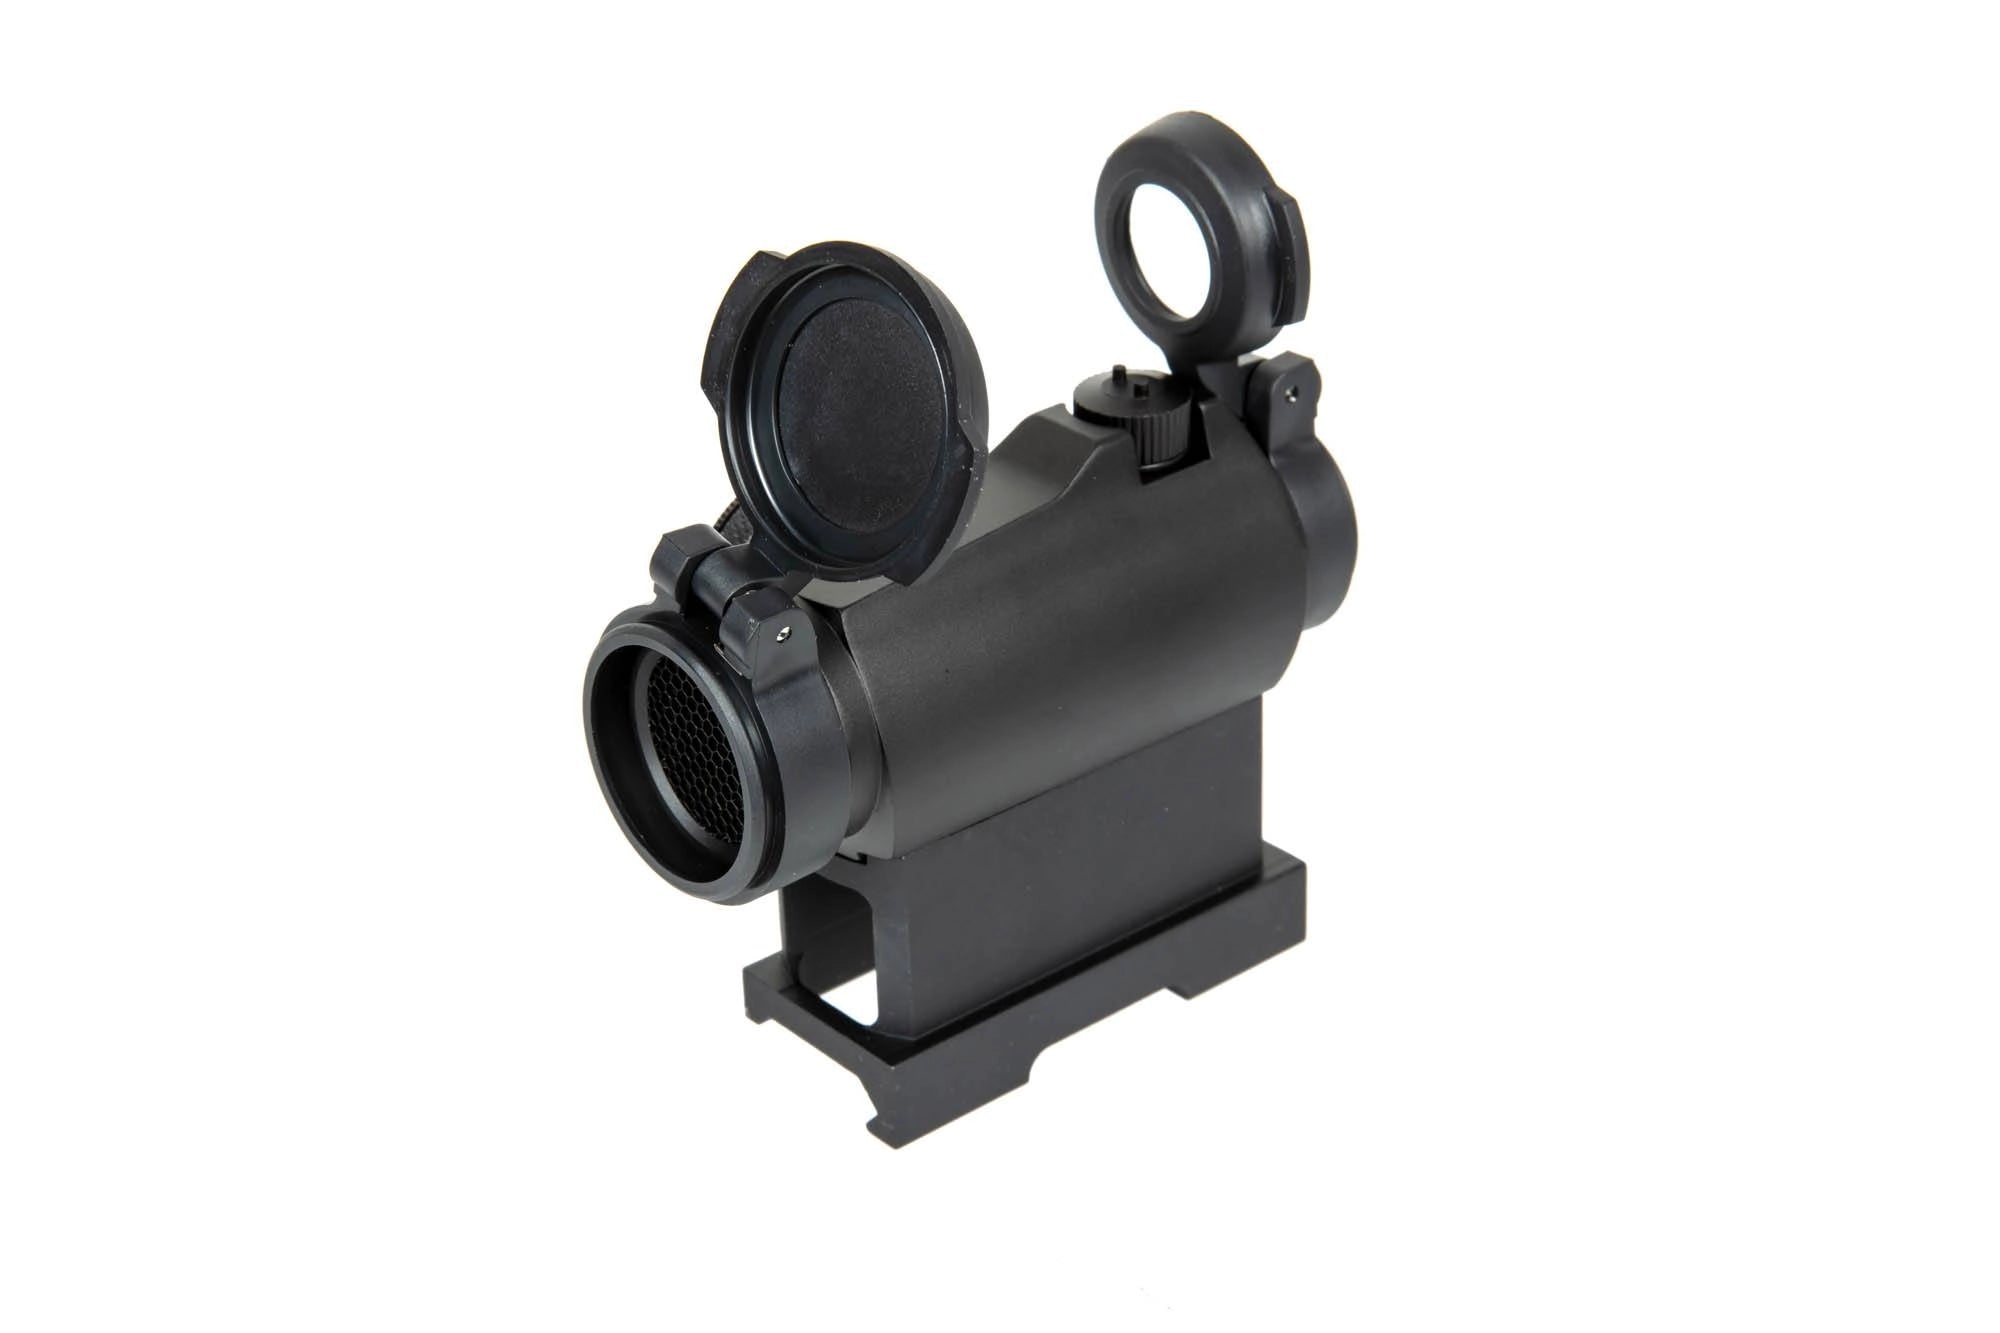 TR02 Red Dot Sight Replica with riser QD mount - black